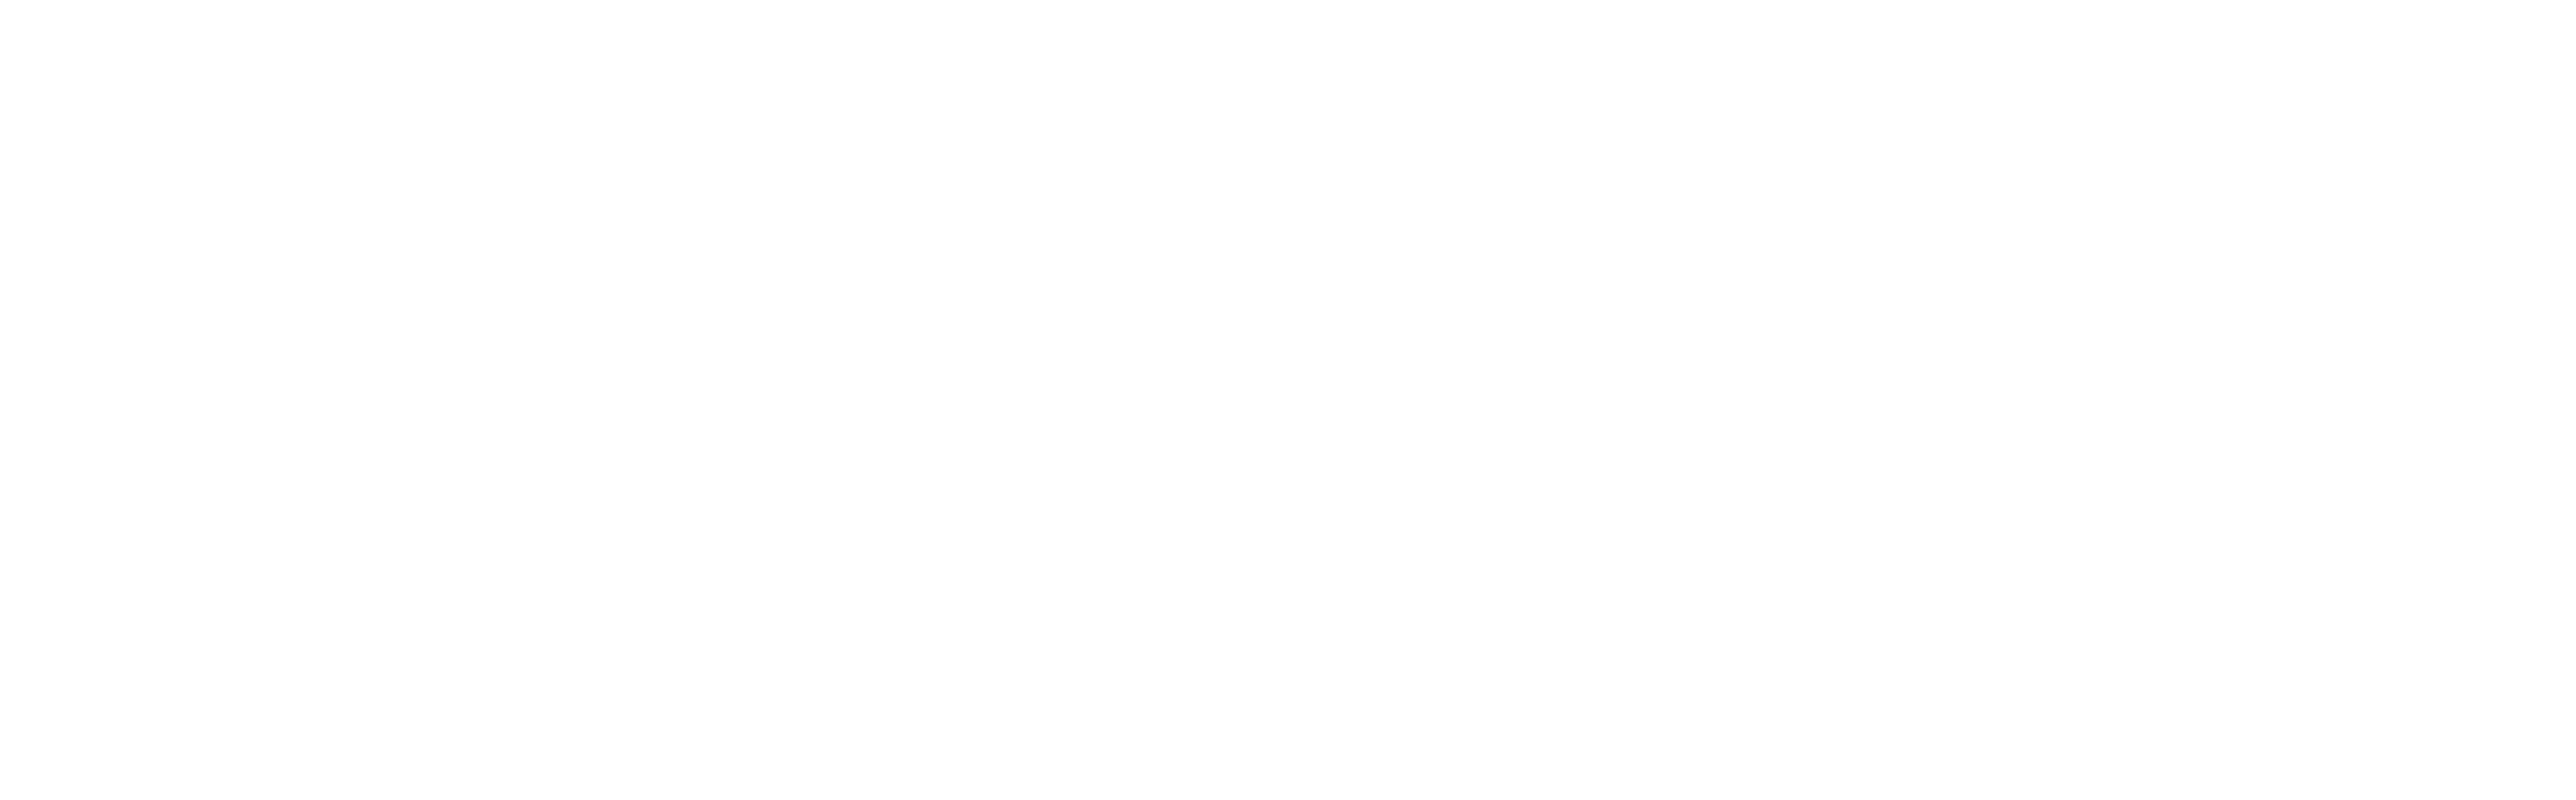 Foodemy logo